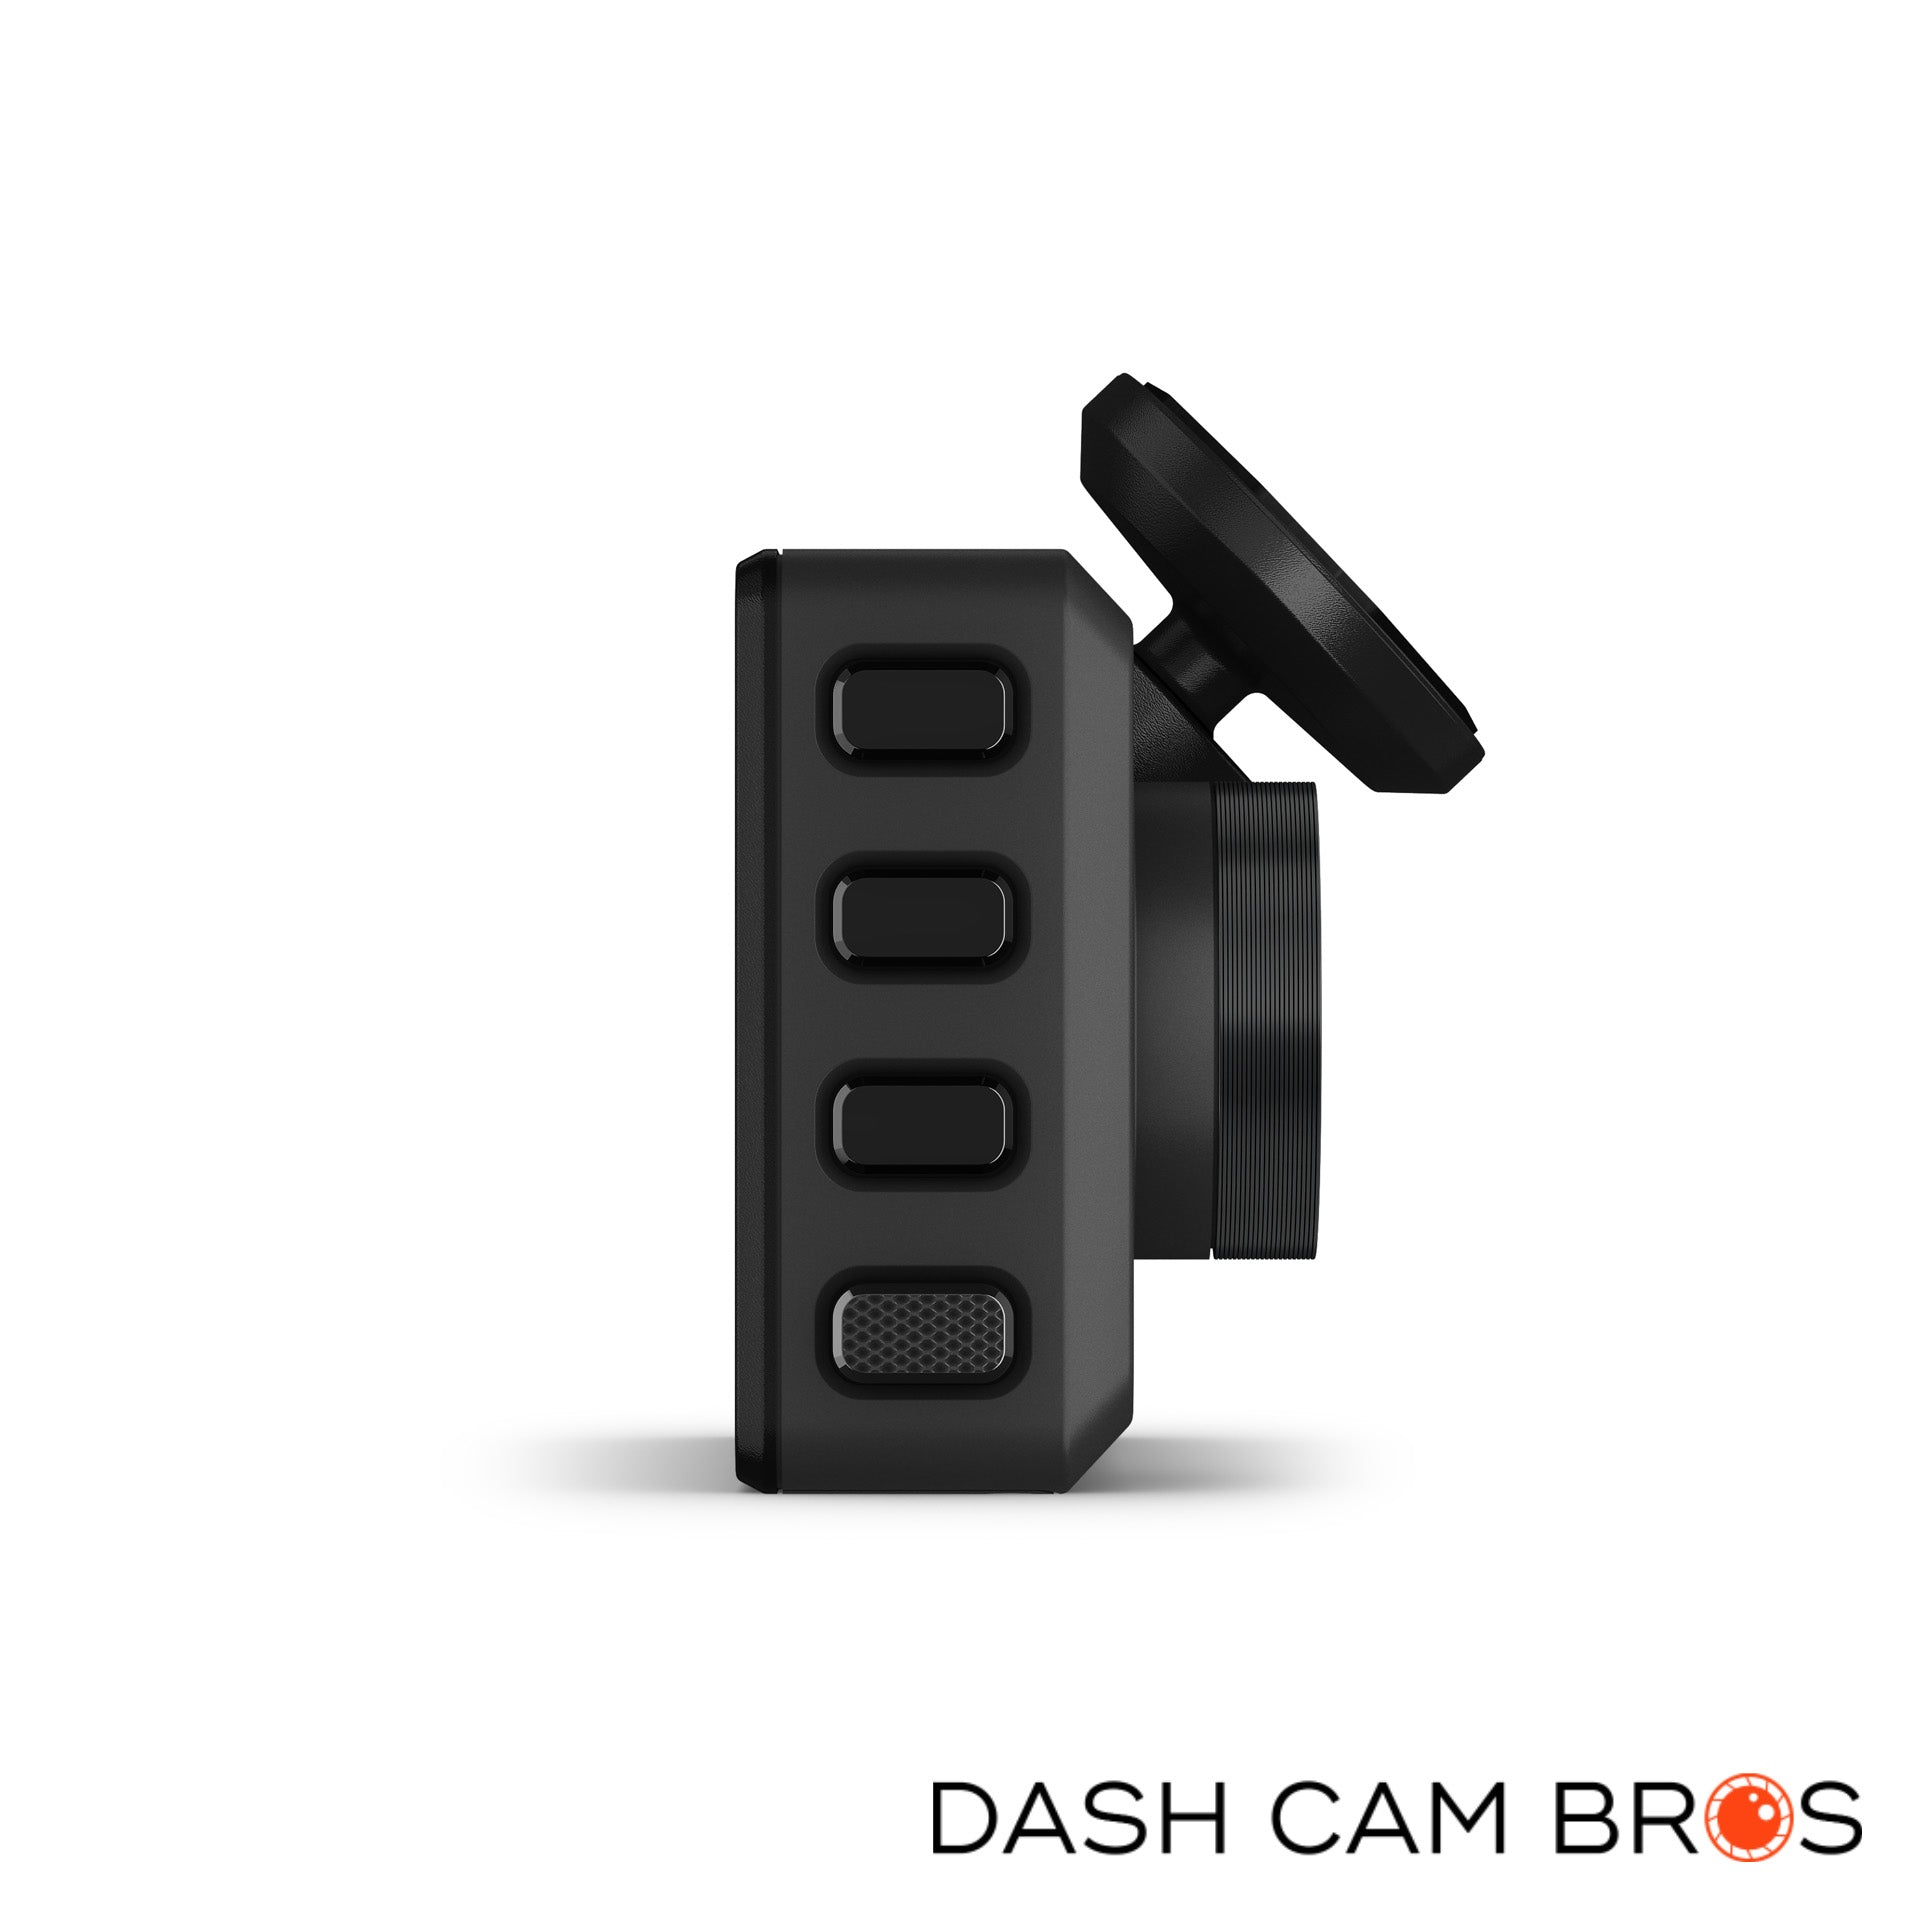 Garmin 67W In-Car Camera 1440p Dash Cam - See Description